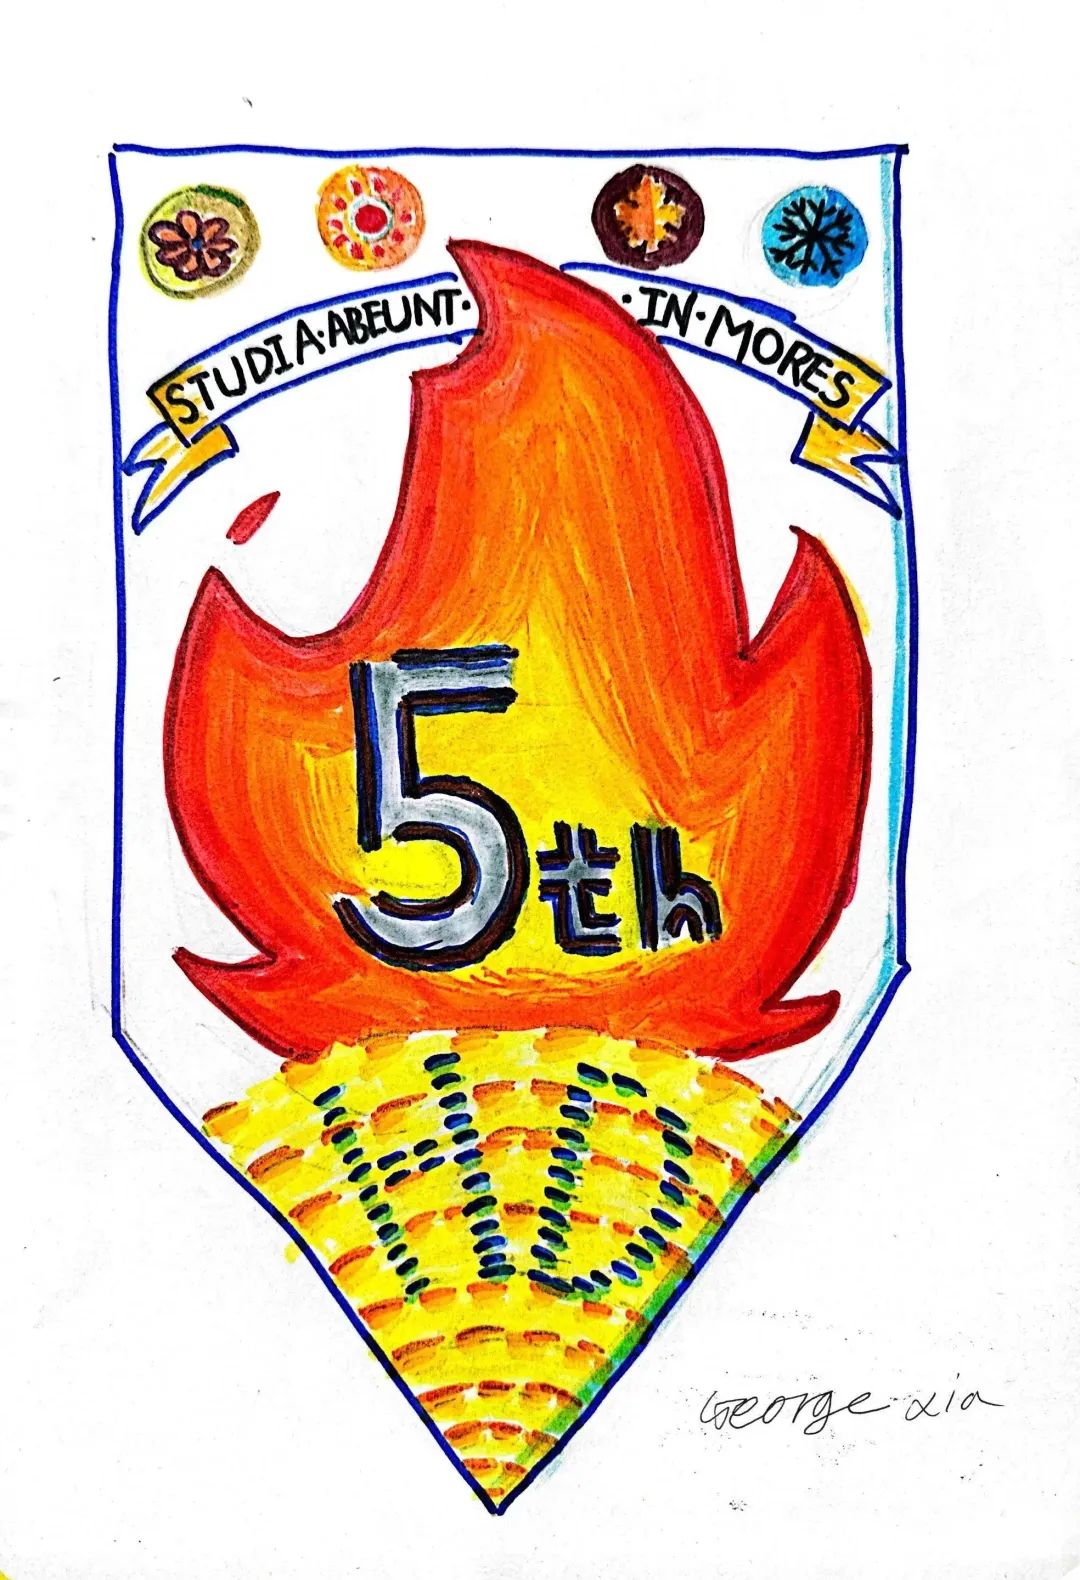 北京赫德五周年 | 来自孩子们的校庆徽章征集HDBJ 5th Anniversary Badge Collecting